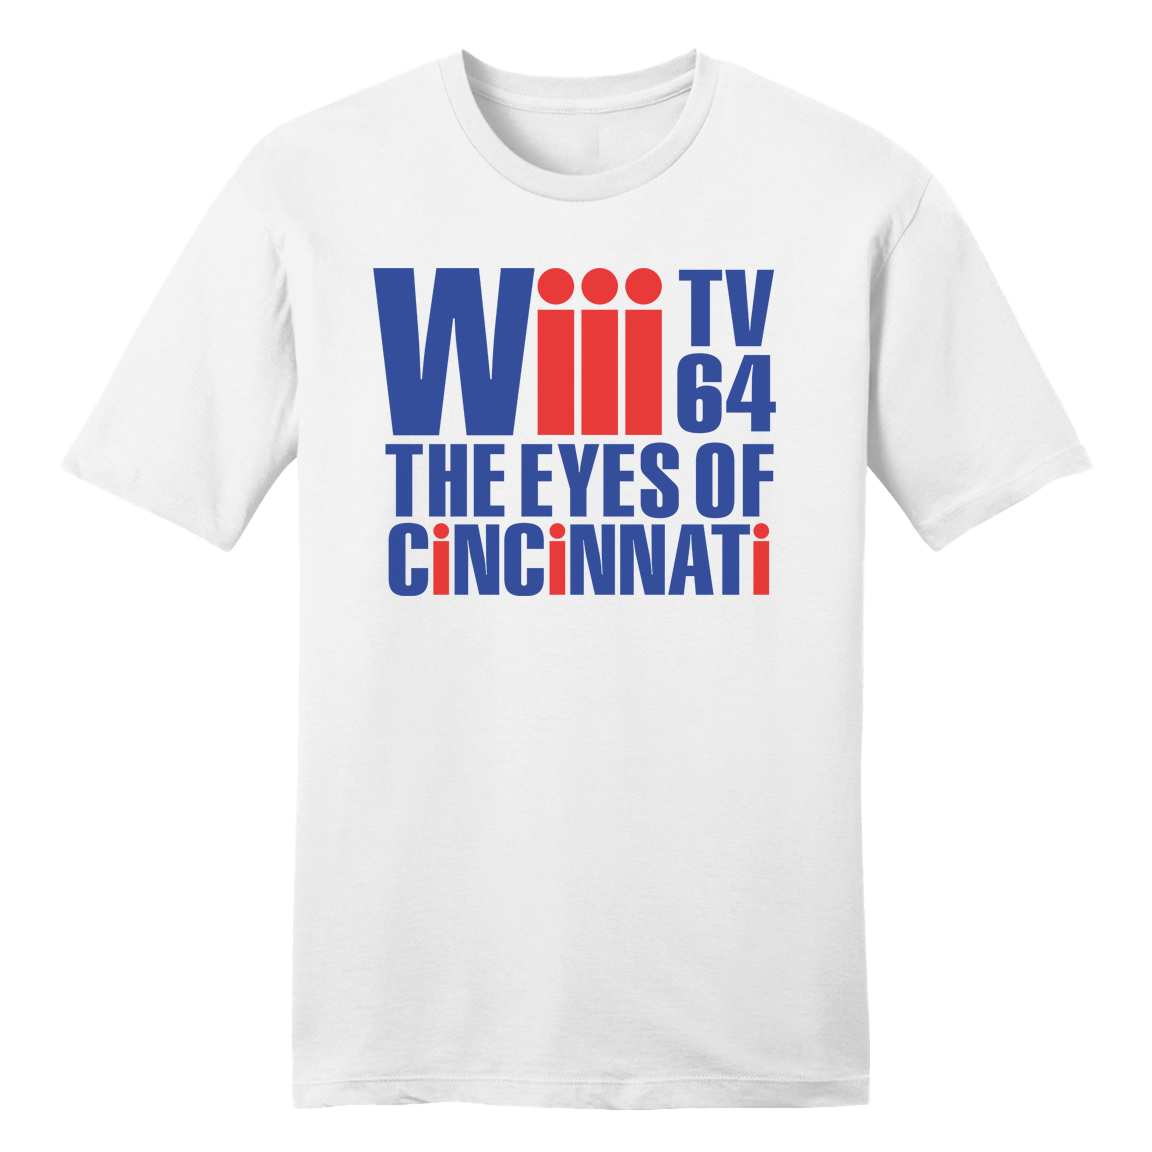 Wiii Channel 64 The Eyes of Cincinnati - Cincy Shirts